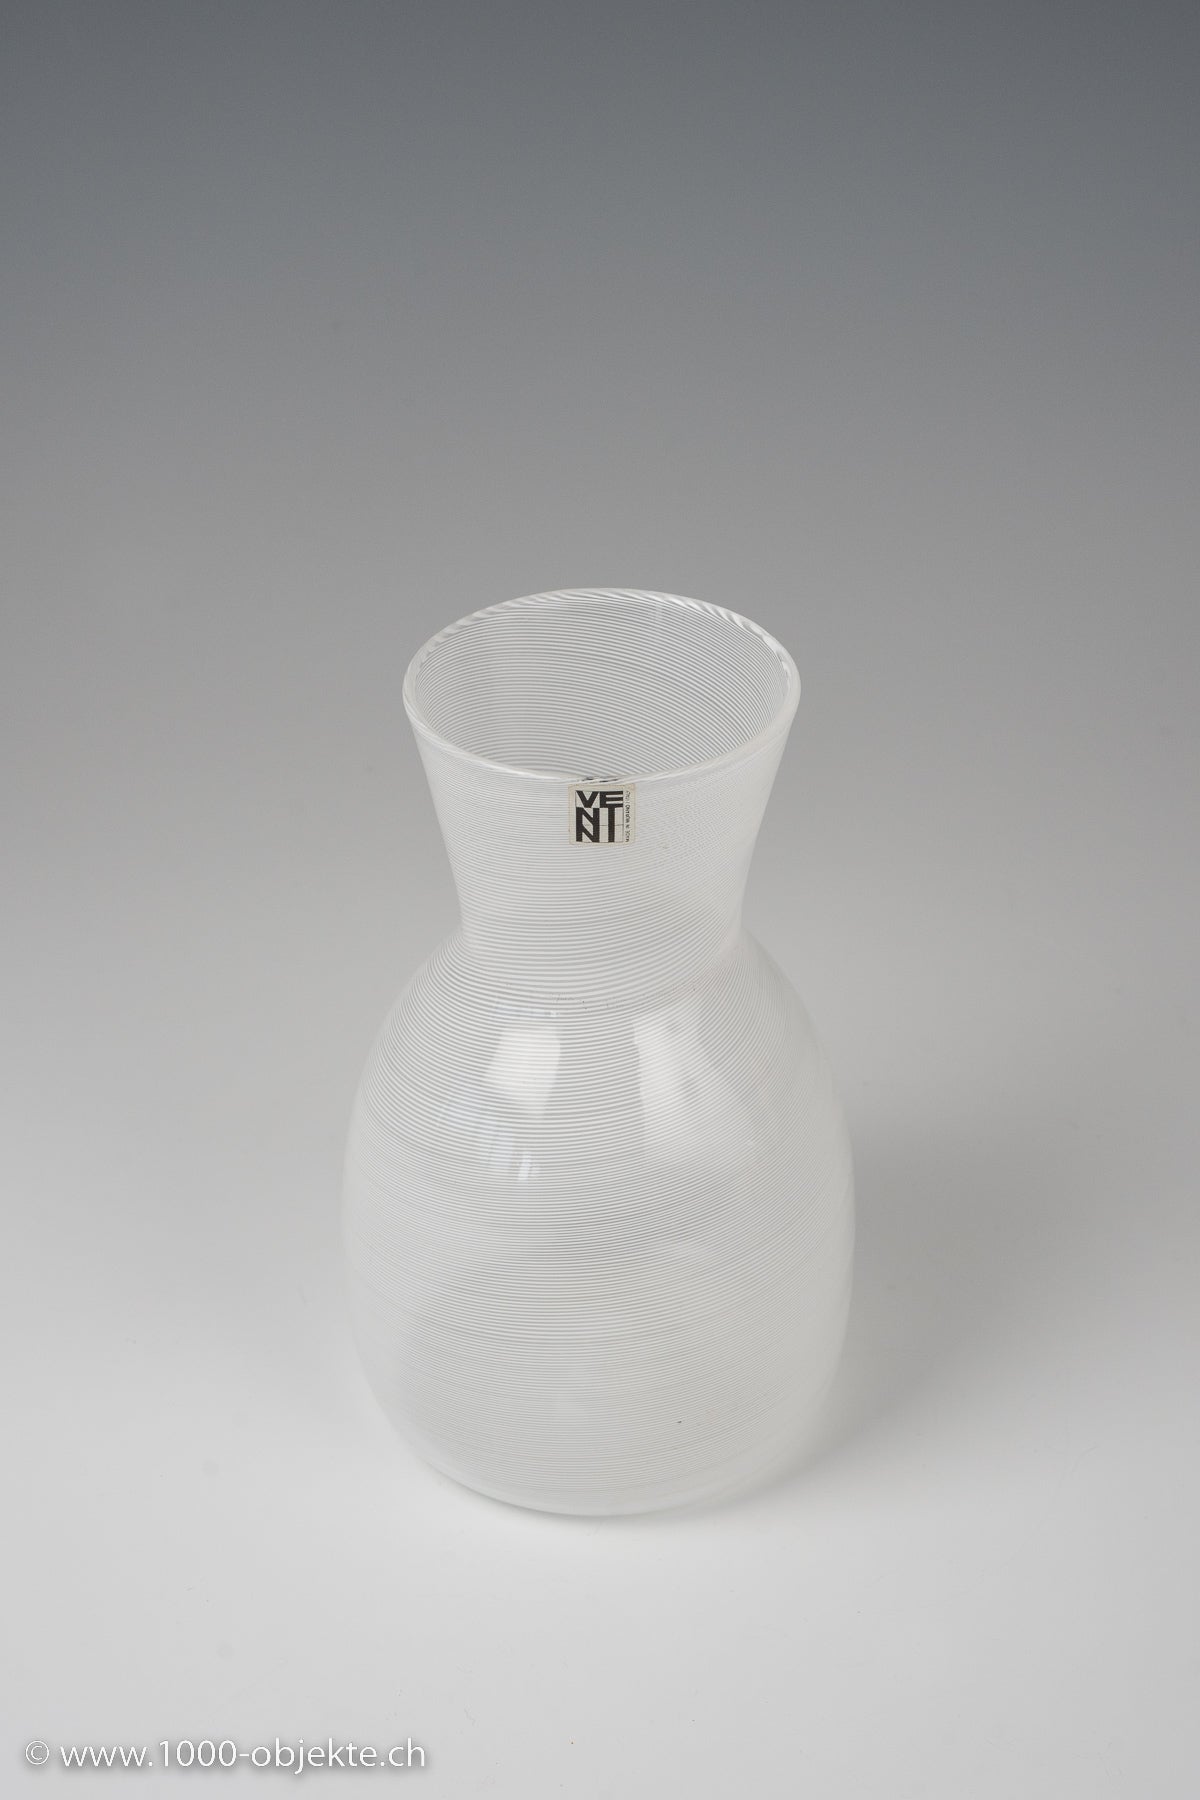 Venini Murano Glass Vase White Thread Design , signed and labeled